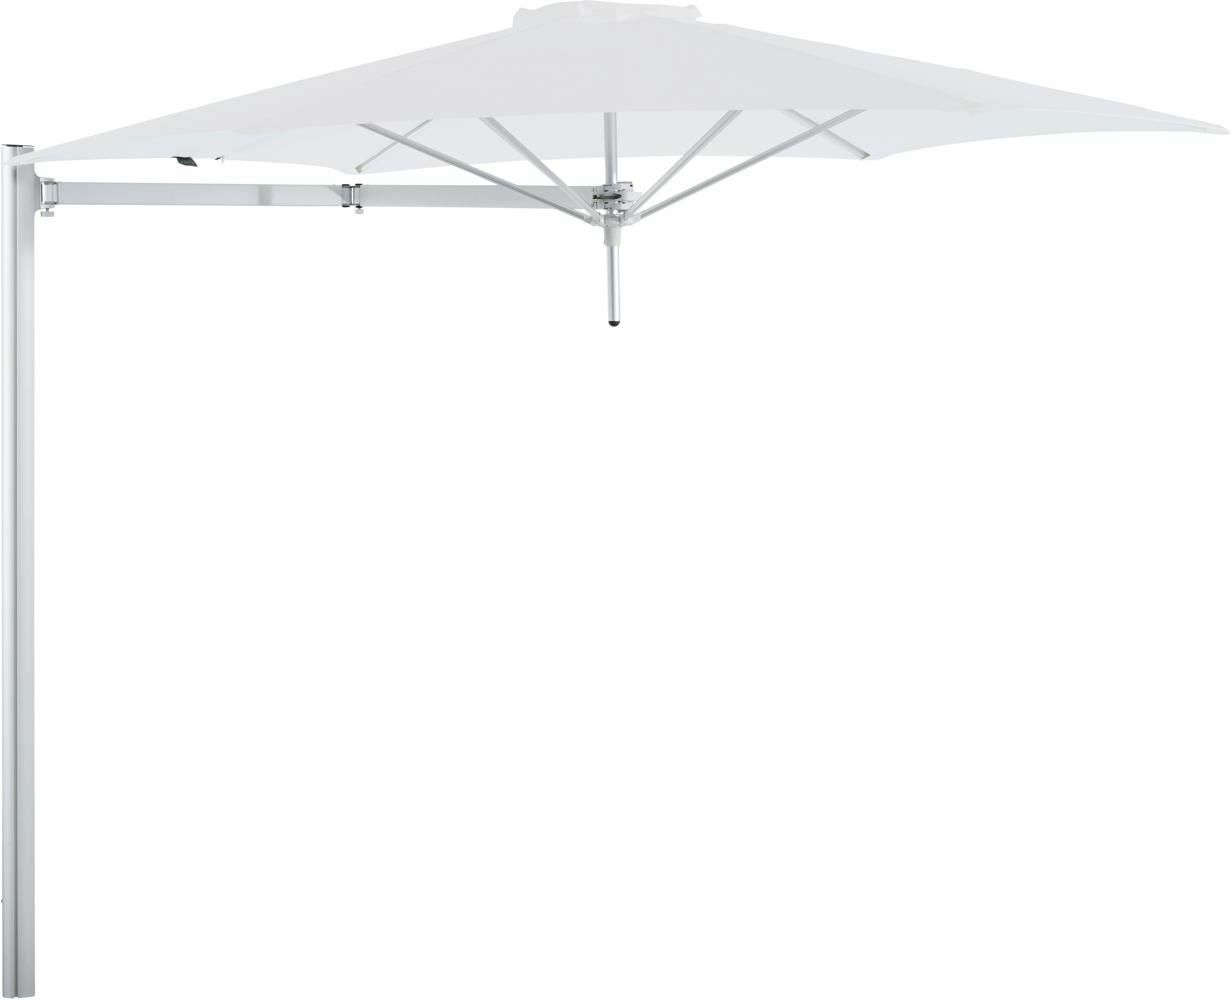 Afbeelding van Umbrosa Paraflex Mono parasol | 3 m | Natural